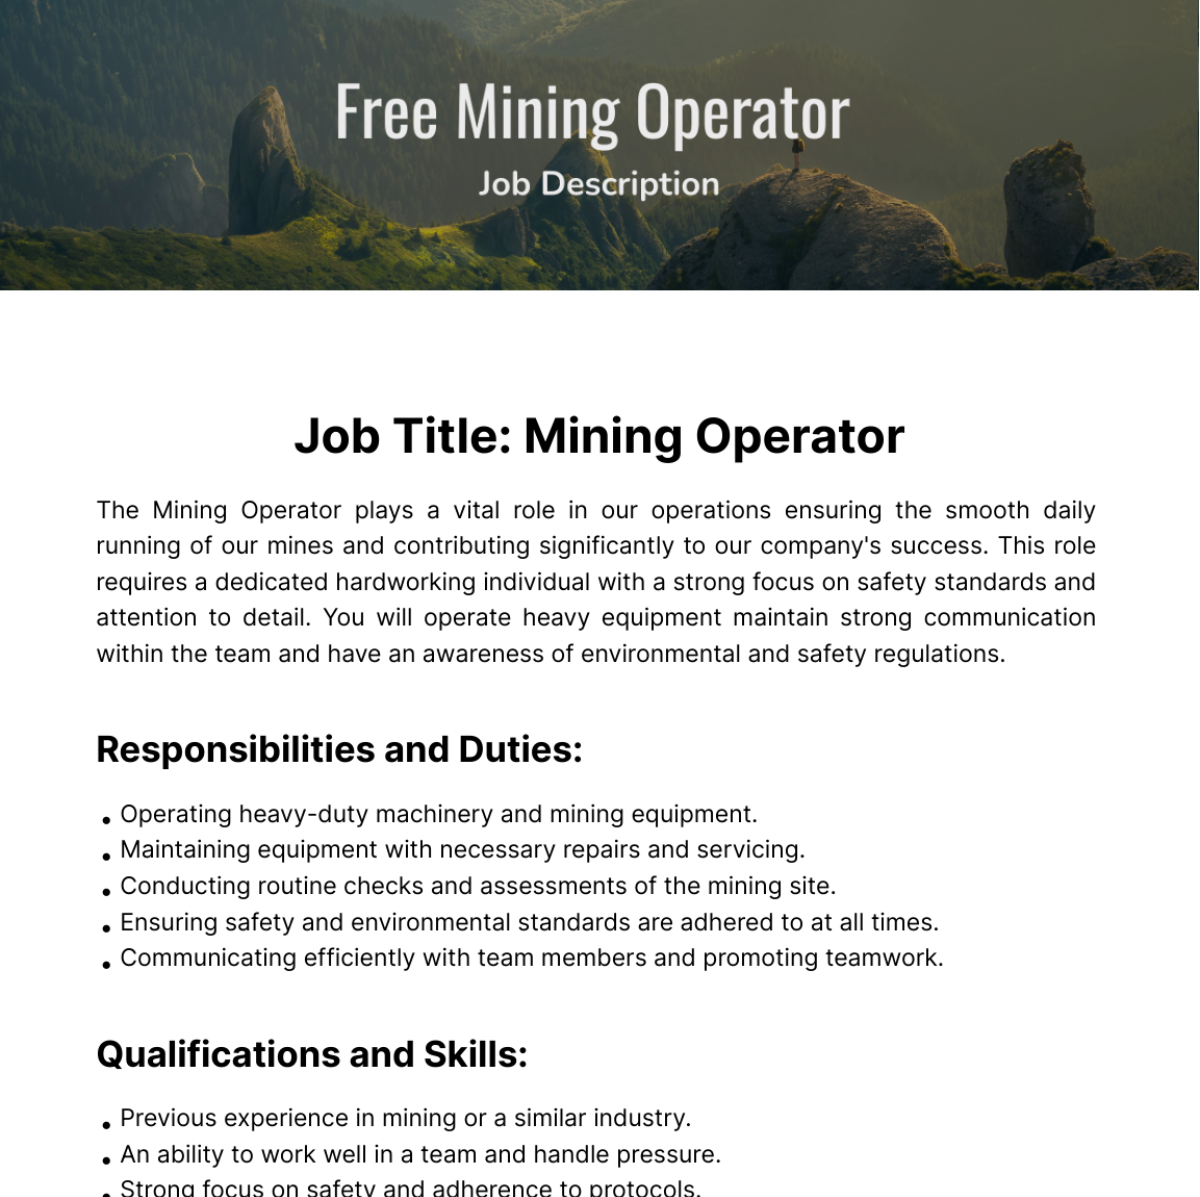 Free Mining Operator Job Description Template